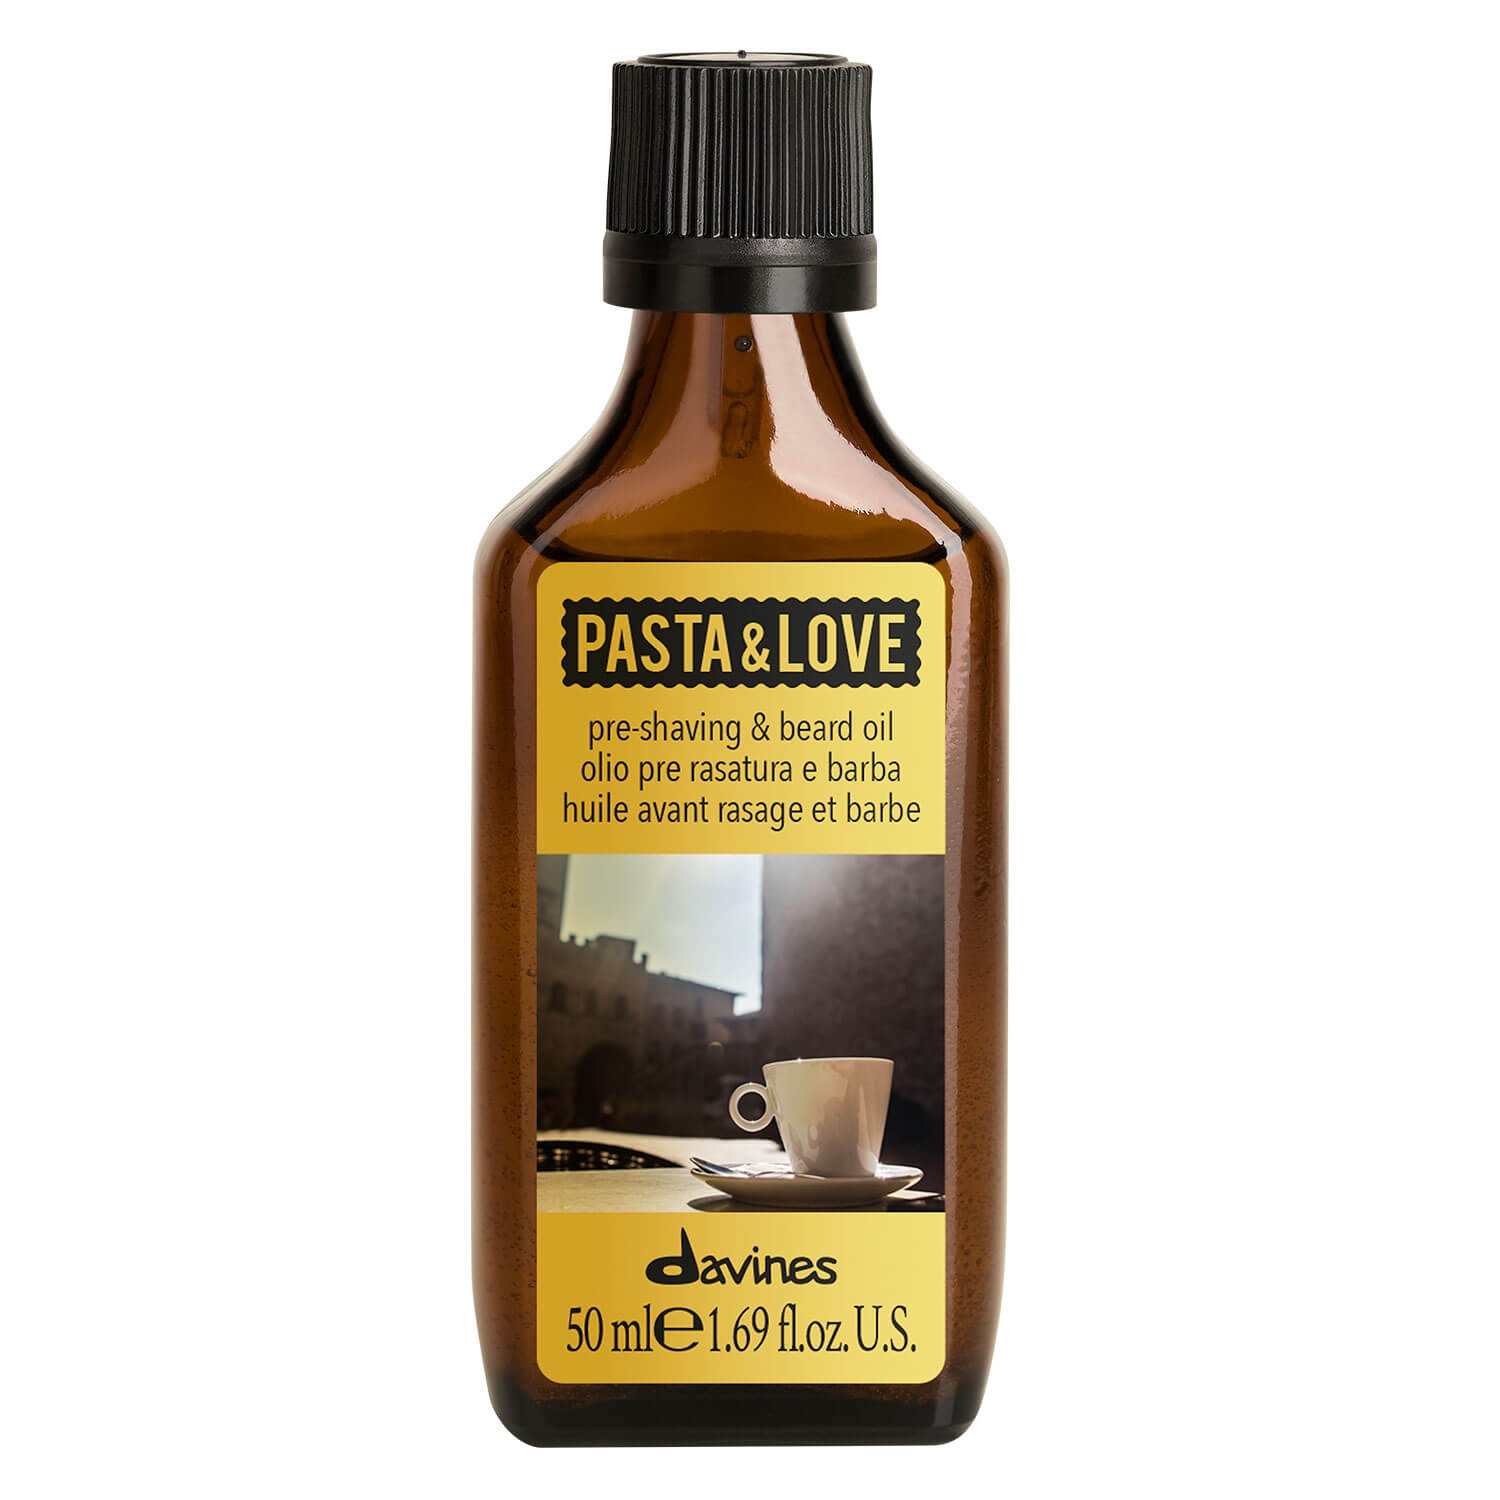 Product image from Pasta & Love - Pre-Shavinig & Beard Oil